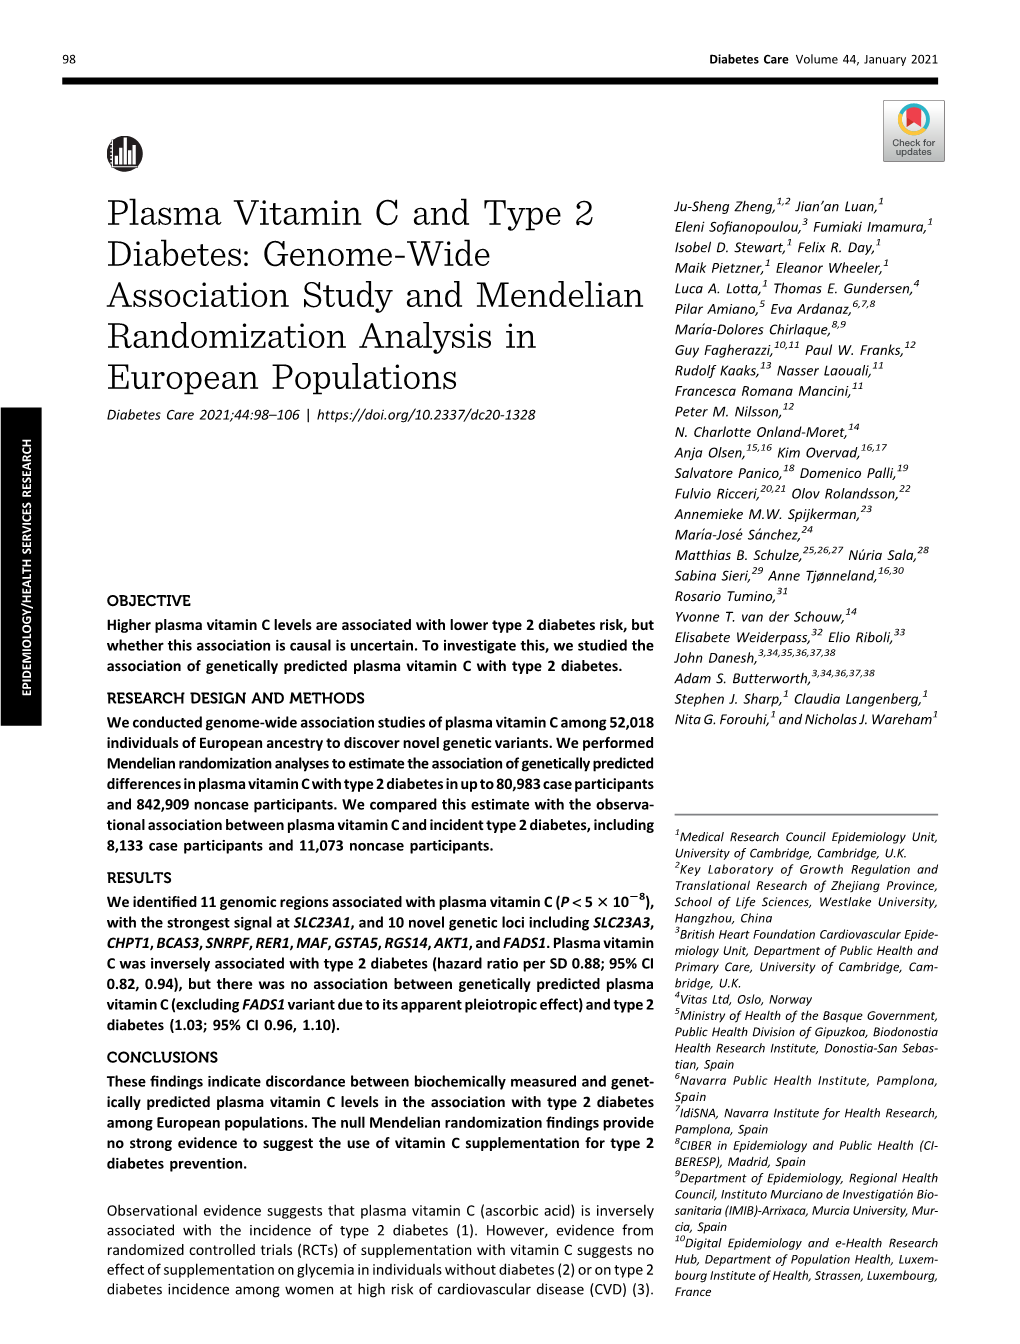 Plasma Vitamin C and Type 2 Diabetes: Genome-Wide